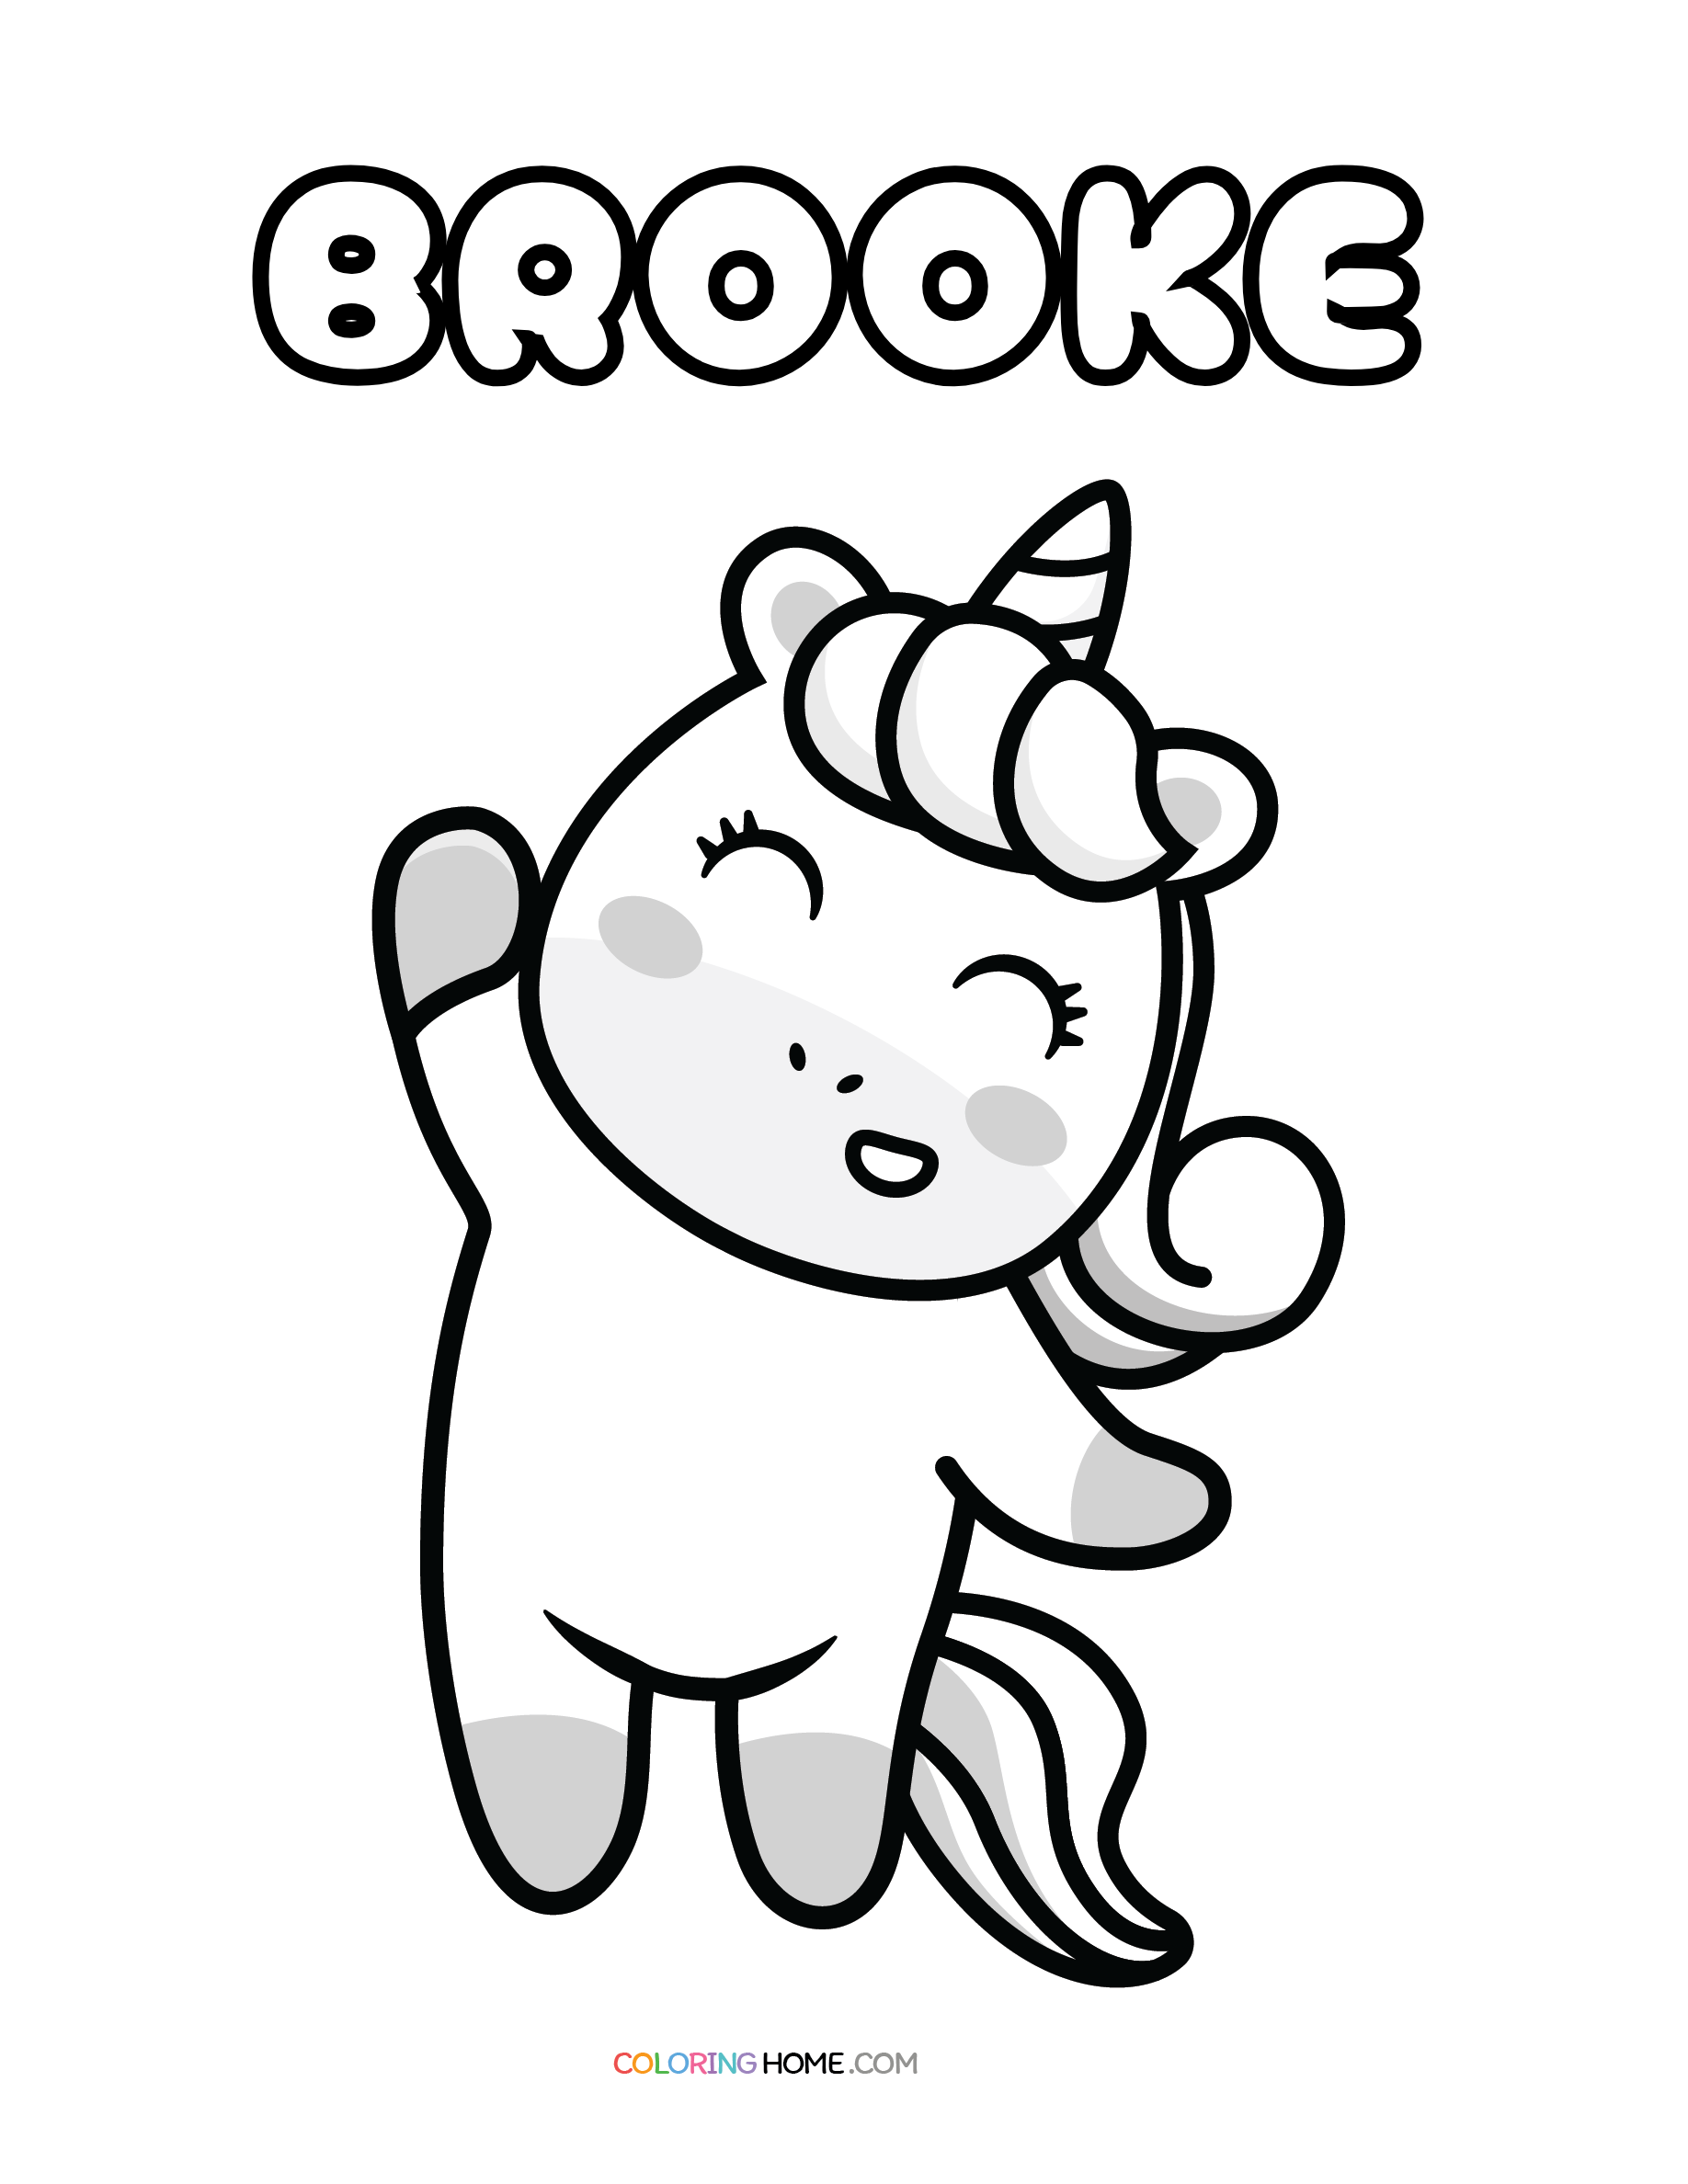 Brooke unicorn coloring page